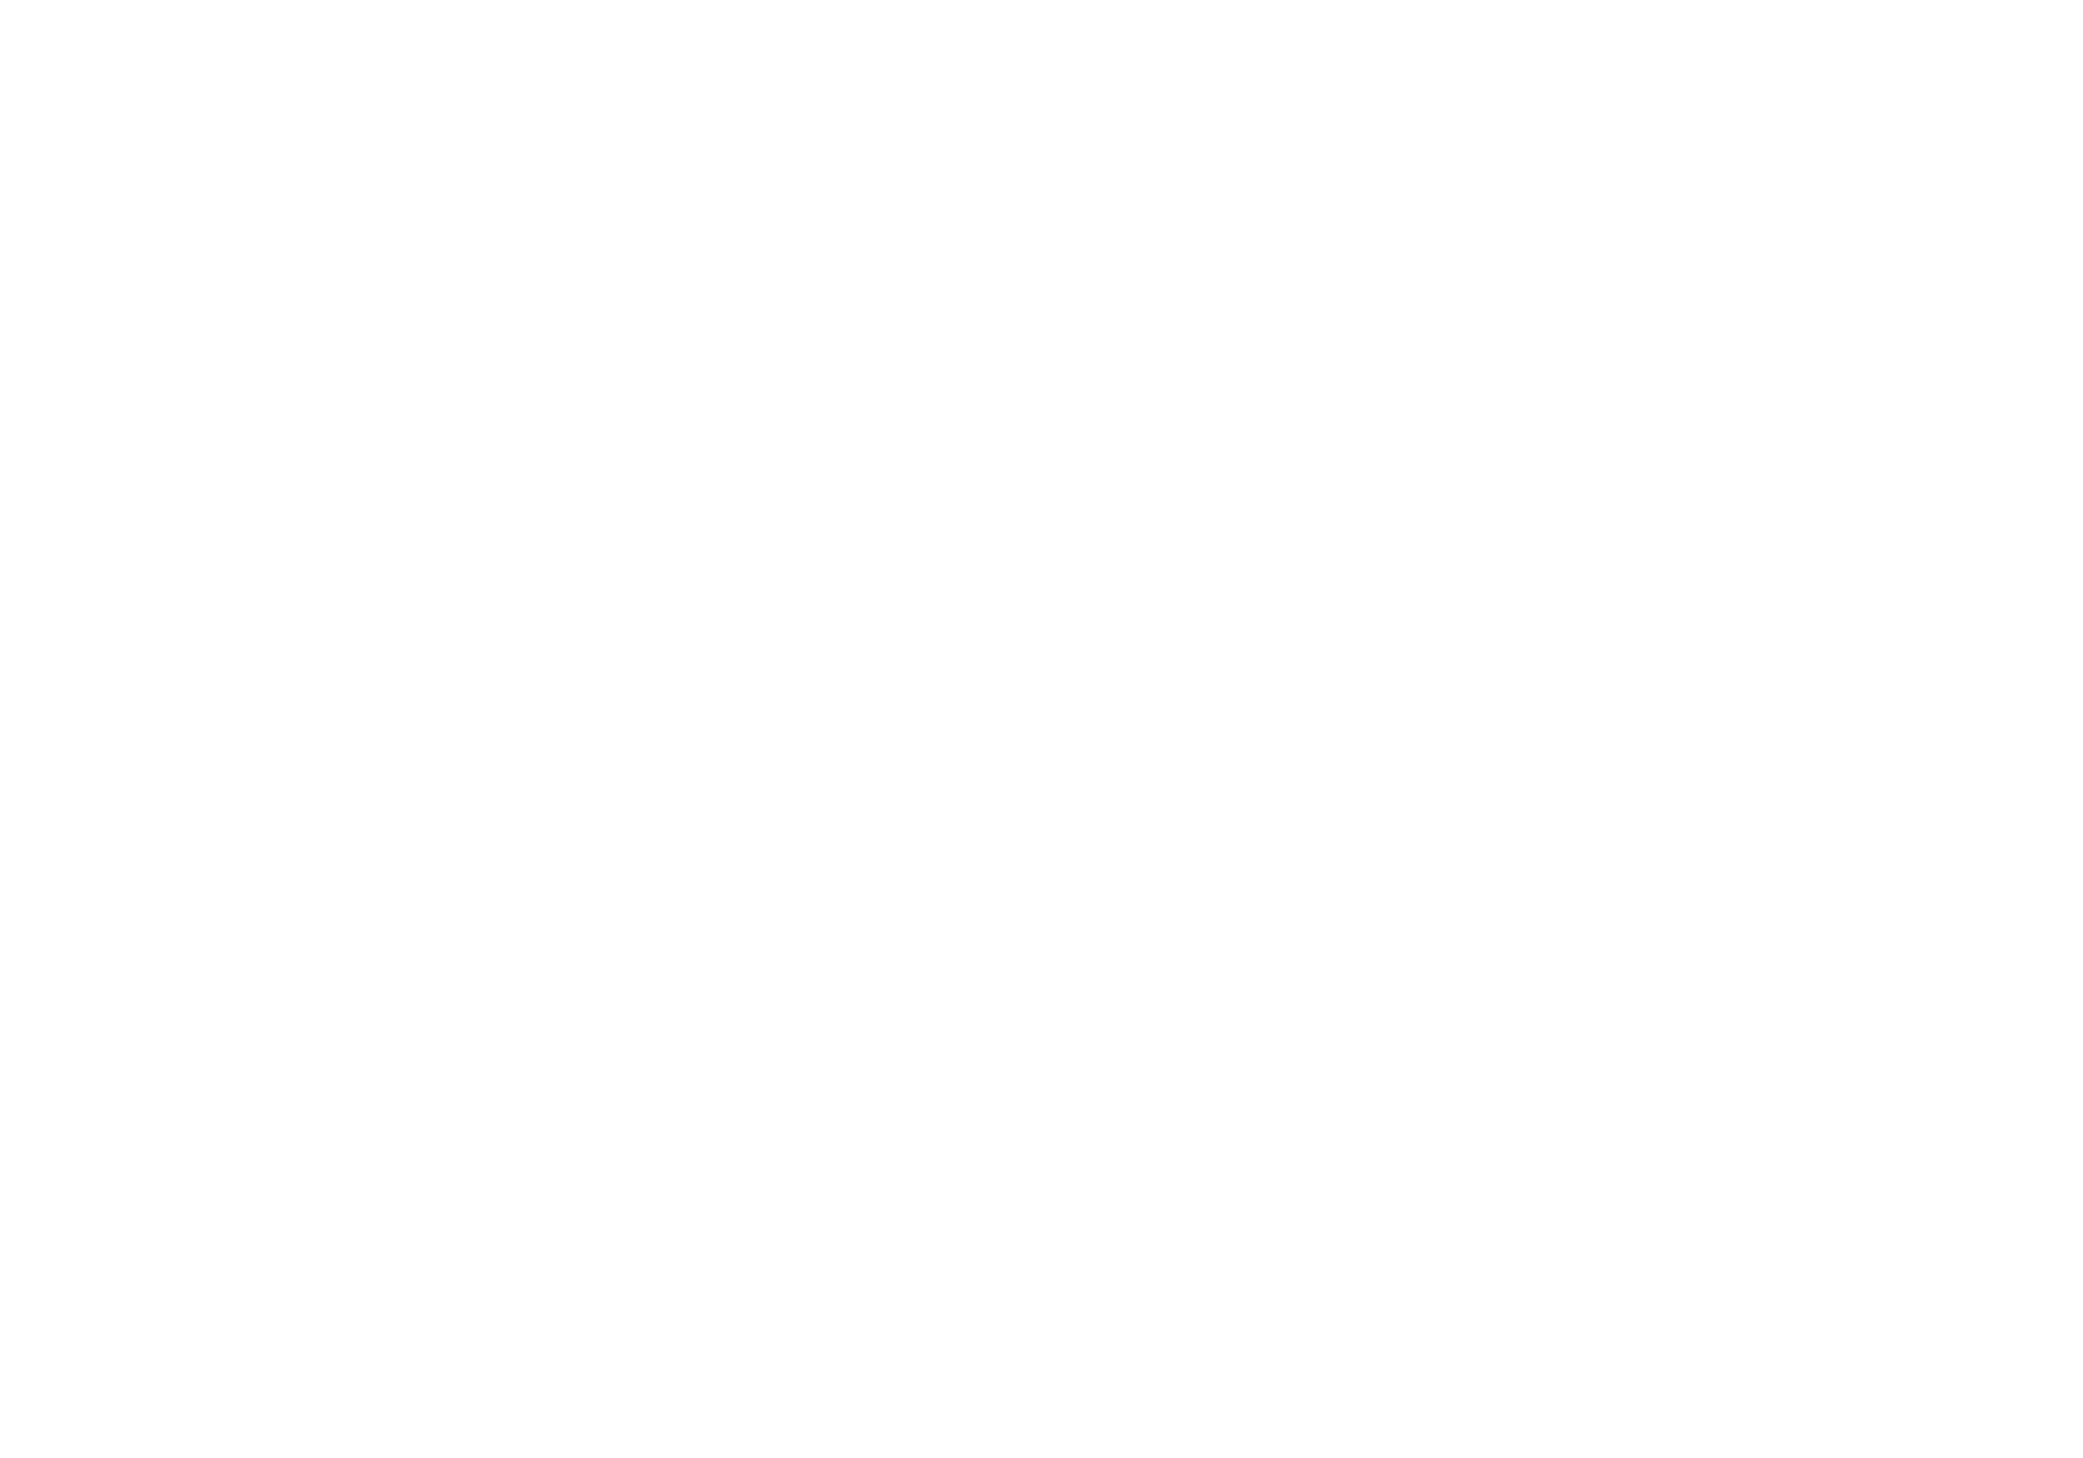 Assos of Switzerland